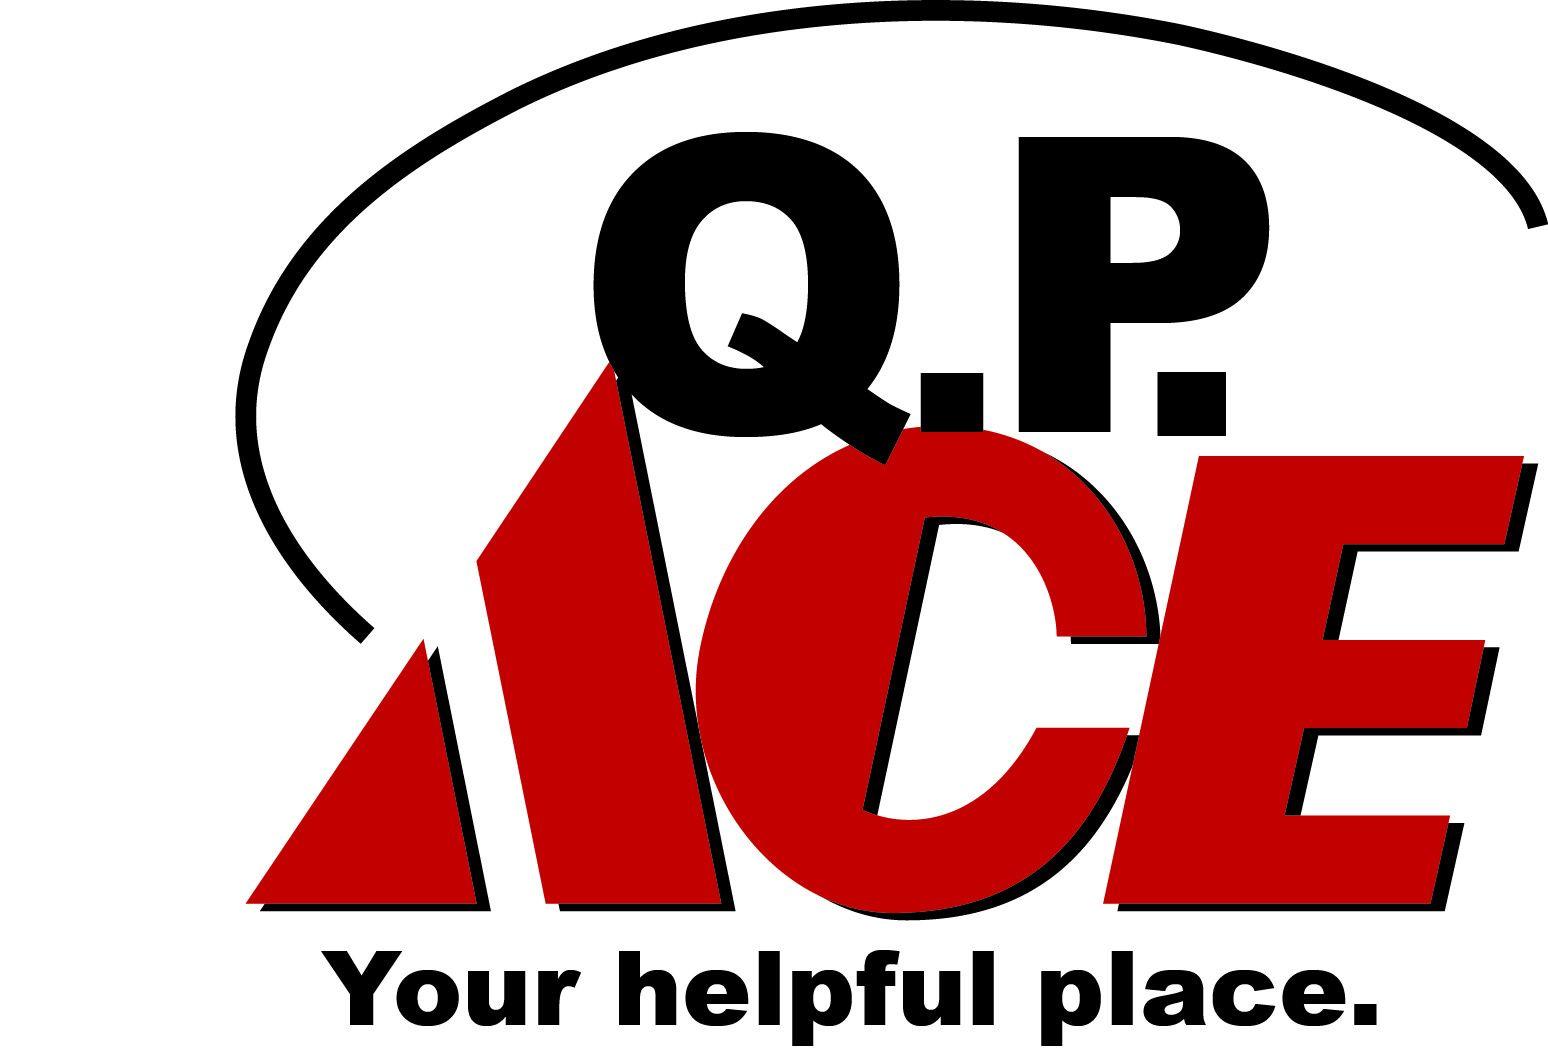 Ace Hardware Logo - QP Ace Hardware. Lincoln Nebraska. Local Hardware Store